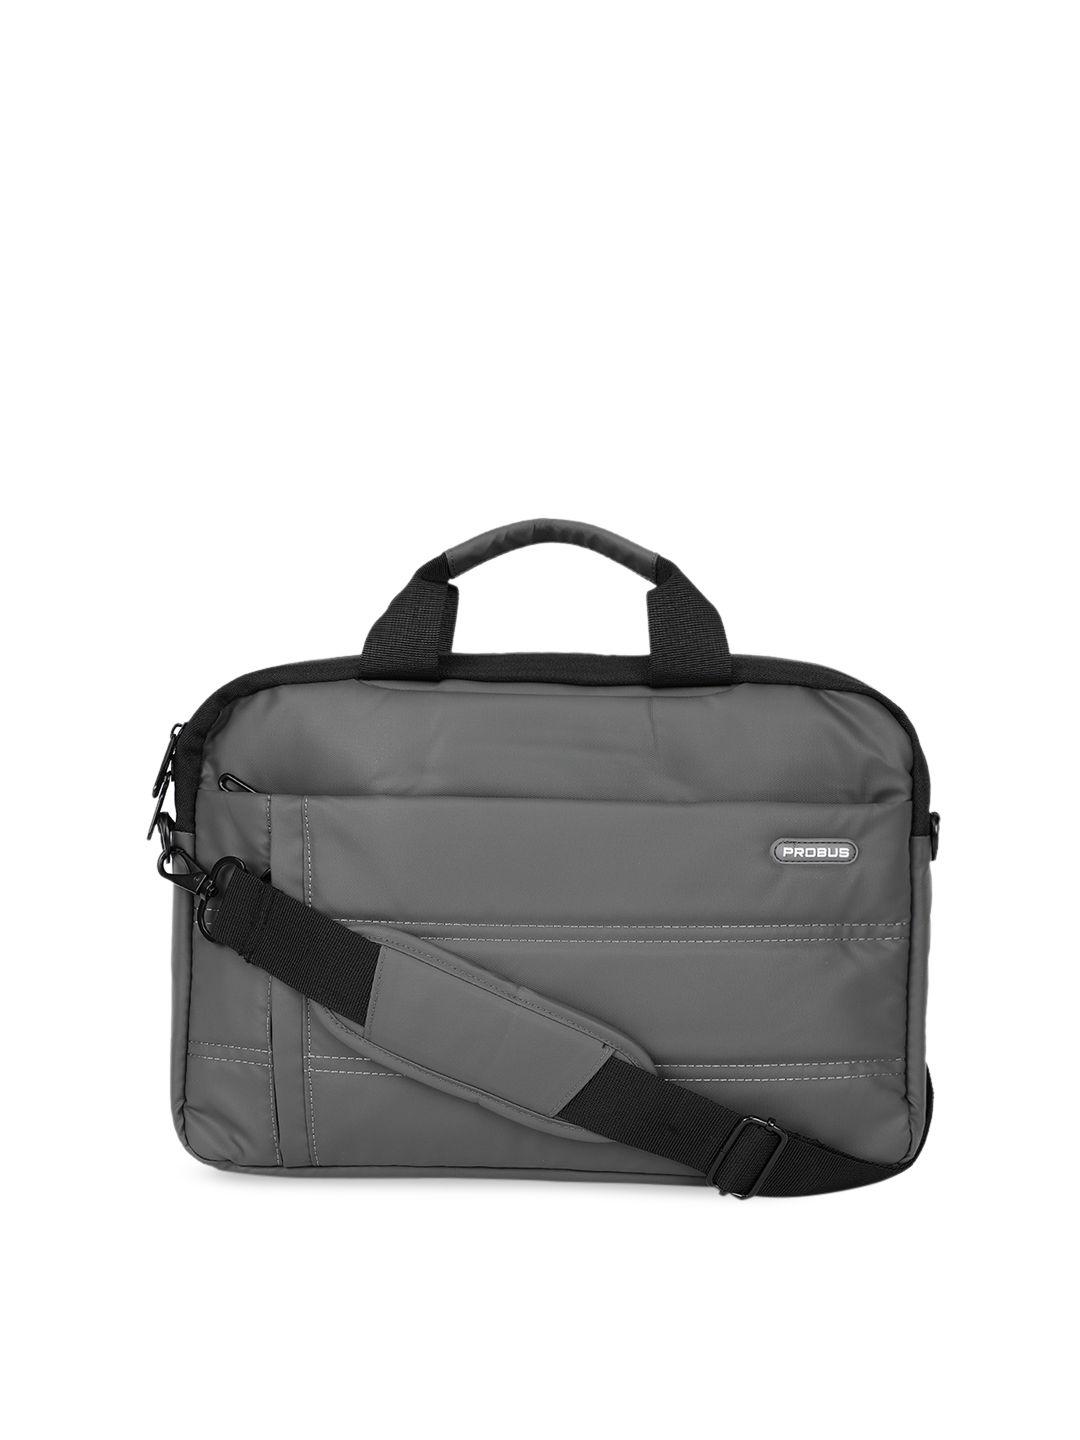 probus unisex grey solid 13.3 inches laptop bag